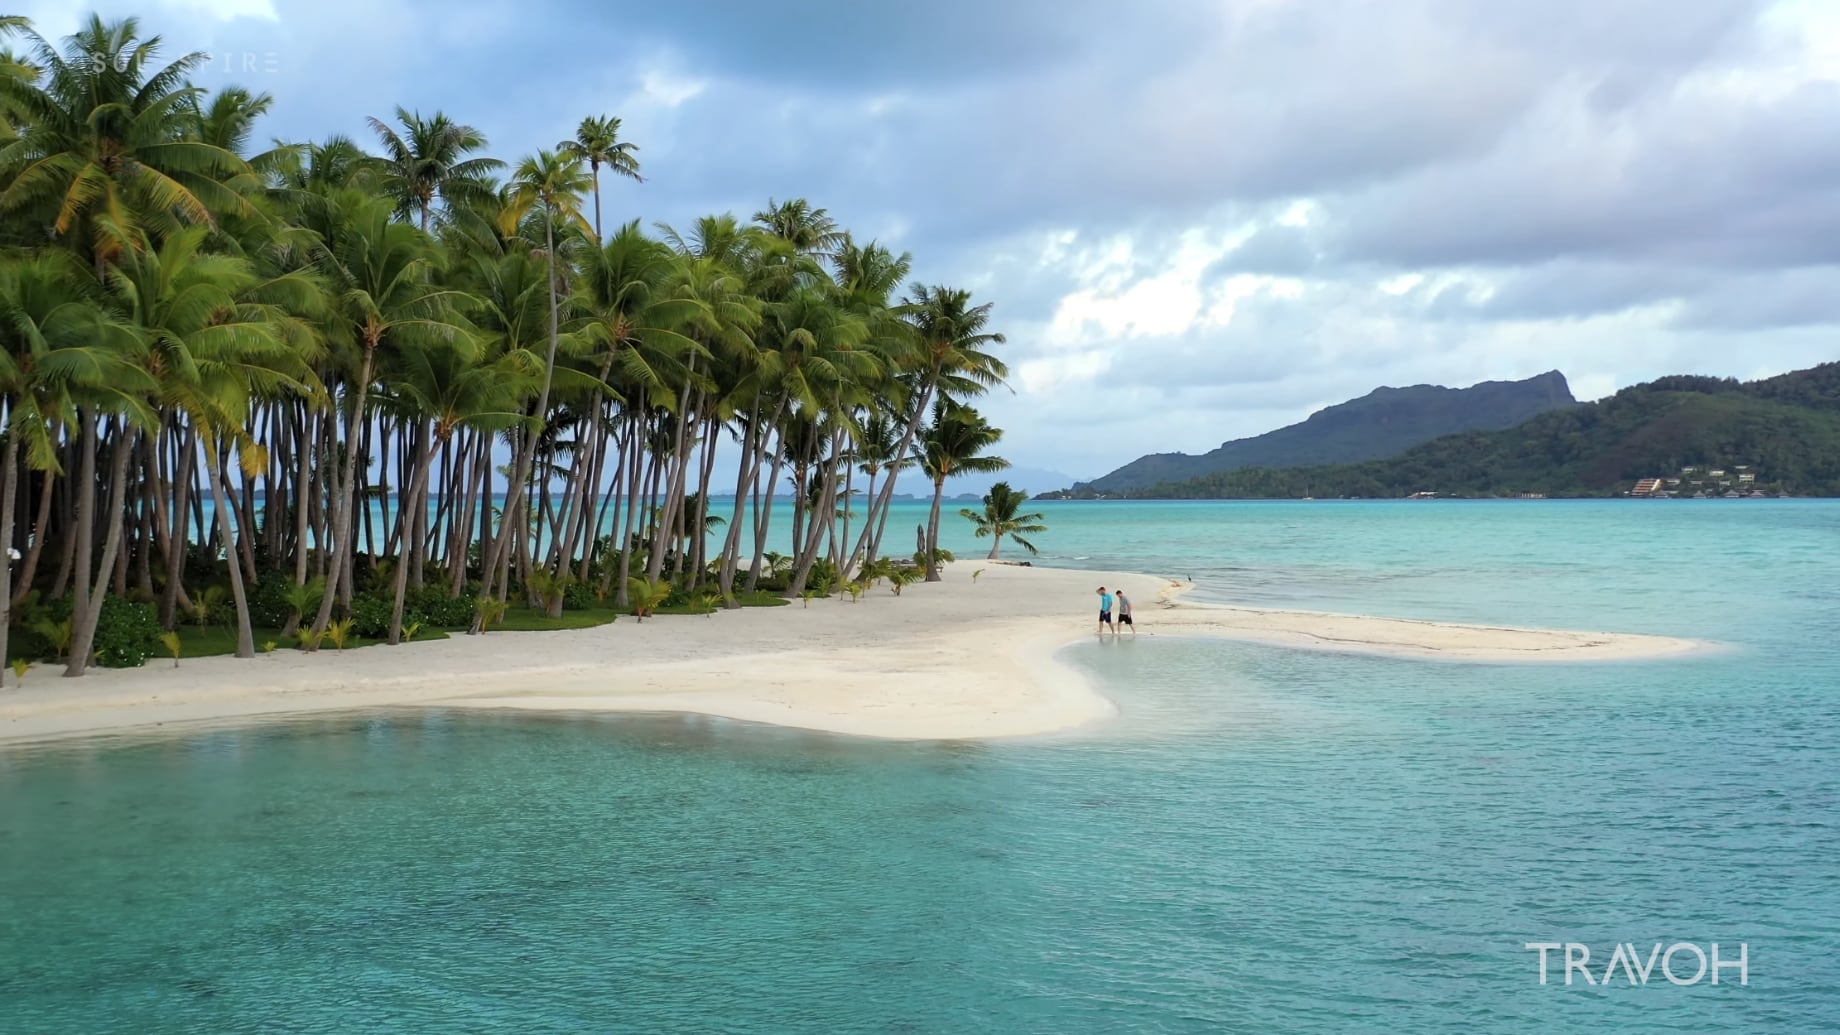 Tropical Island Drone Views - Ocean Nature - Motu Tane - Bora Bora, French Polynesia - 4K Travel